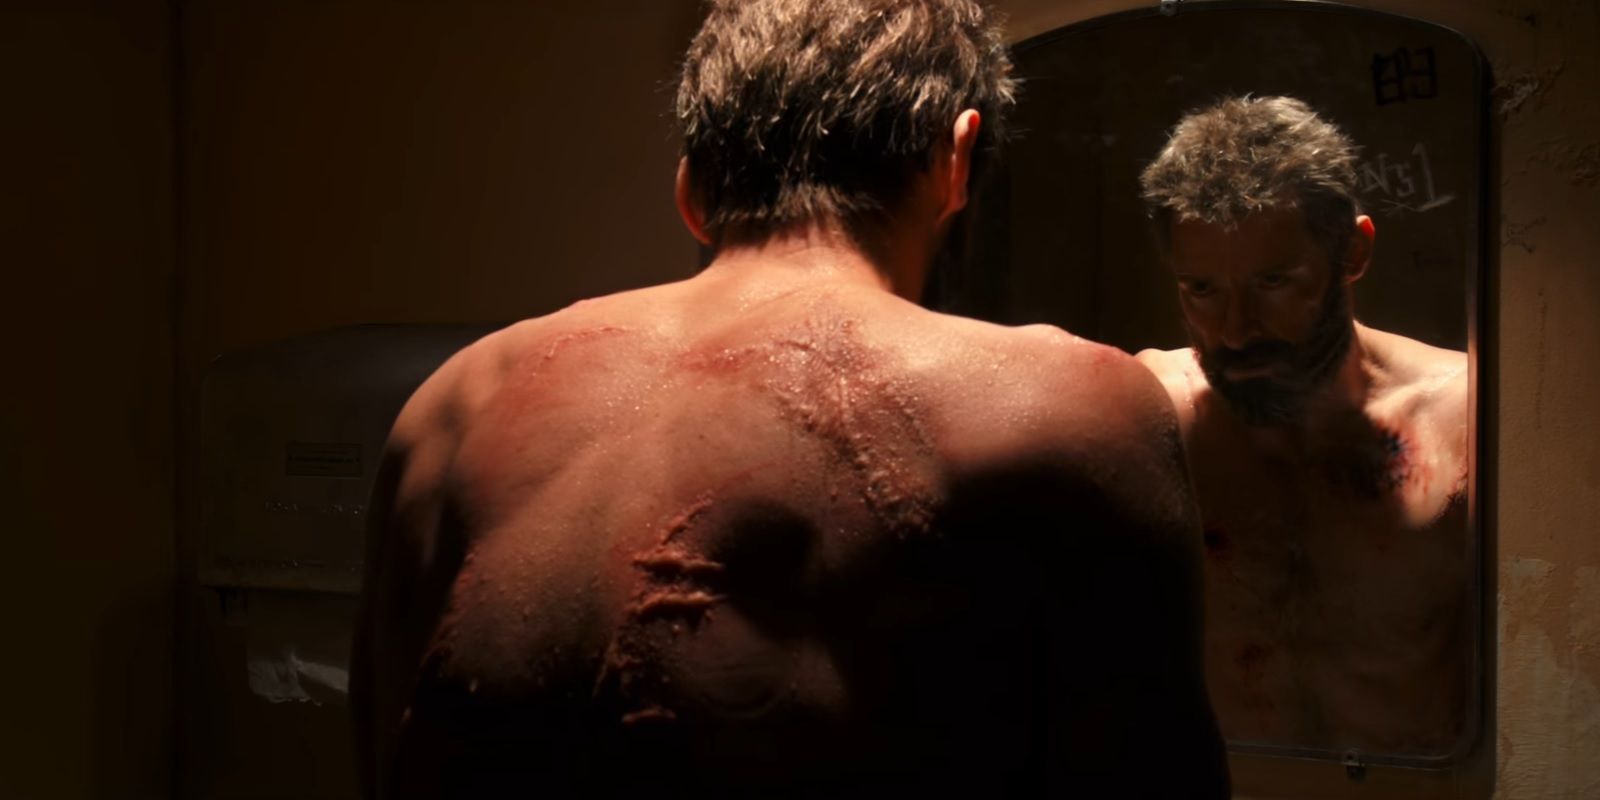 Hugh Jackman as Logan in Logan